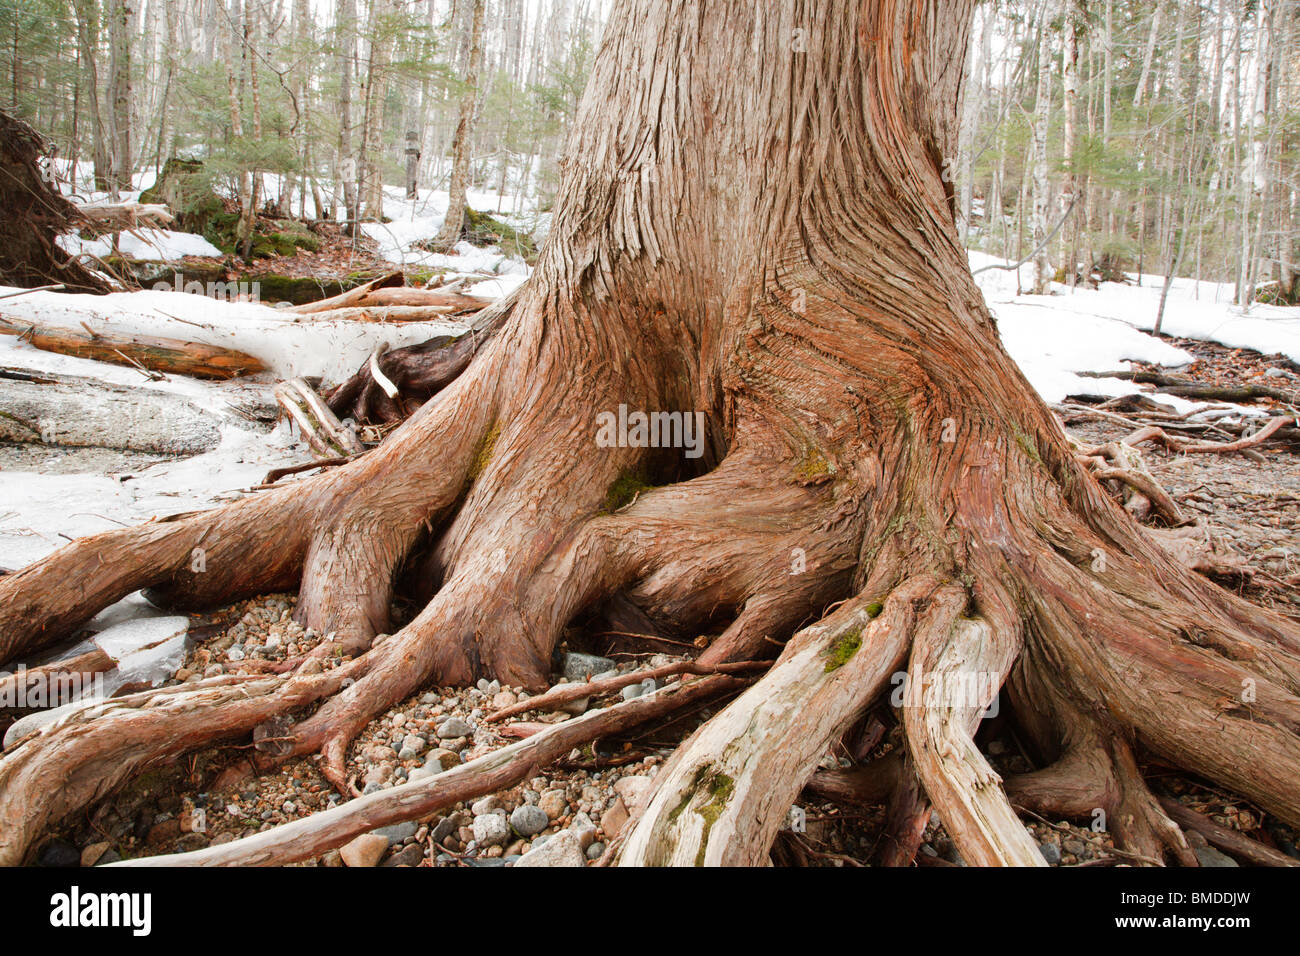 Northern White Cedar tree Stock Photo